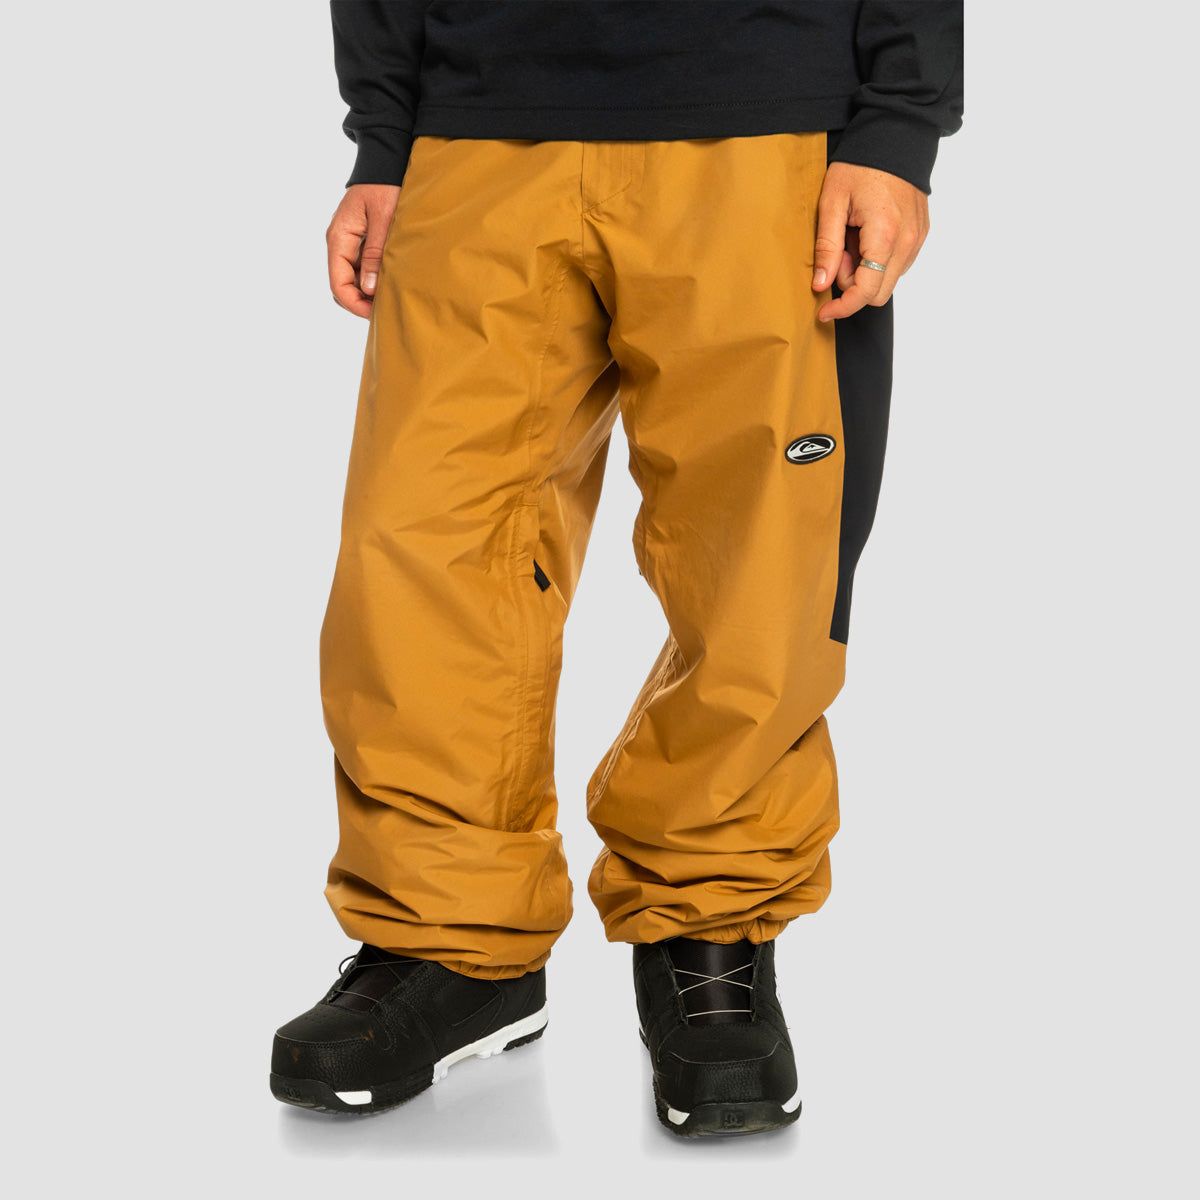 High Altitude GORE-TEX® - Technical Snow Pants for Men